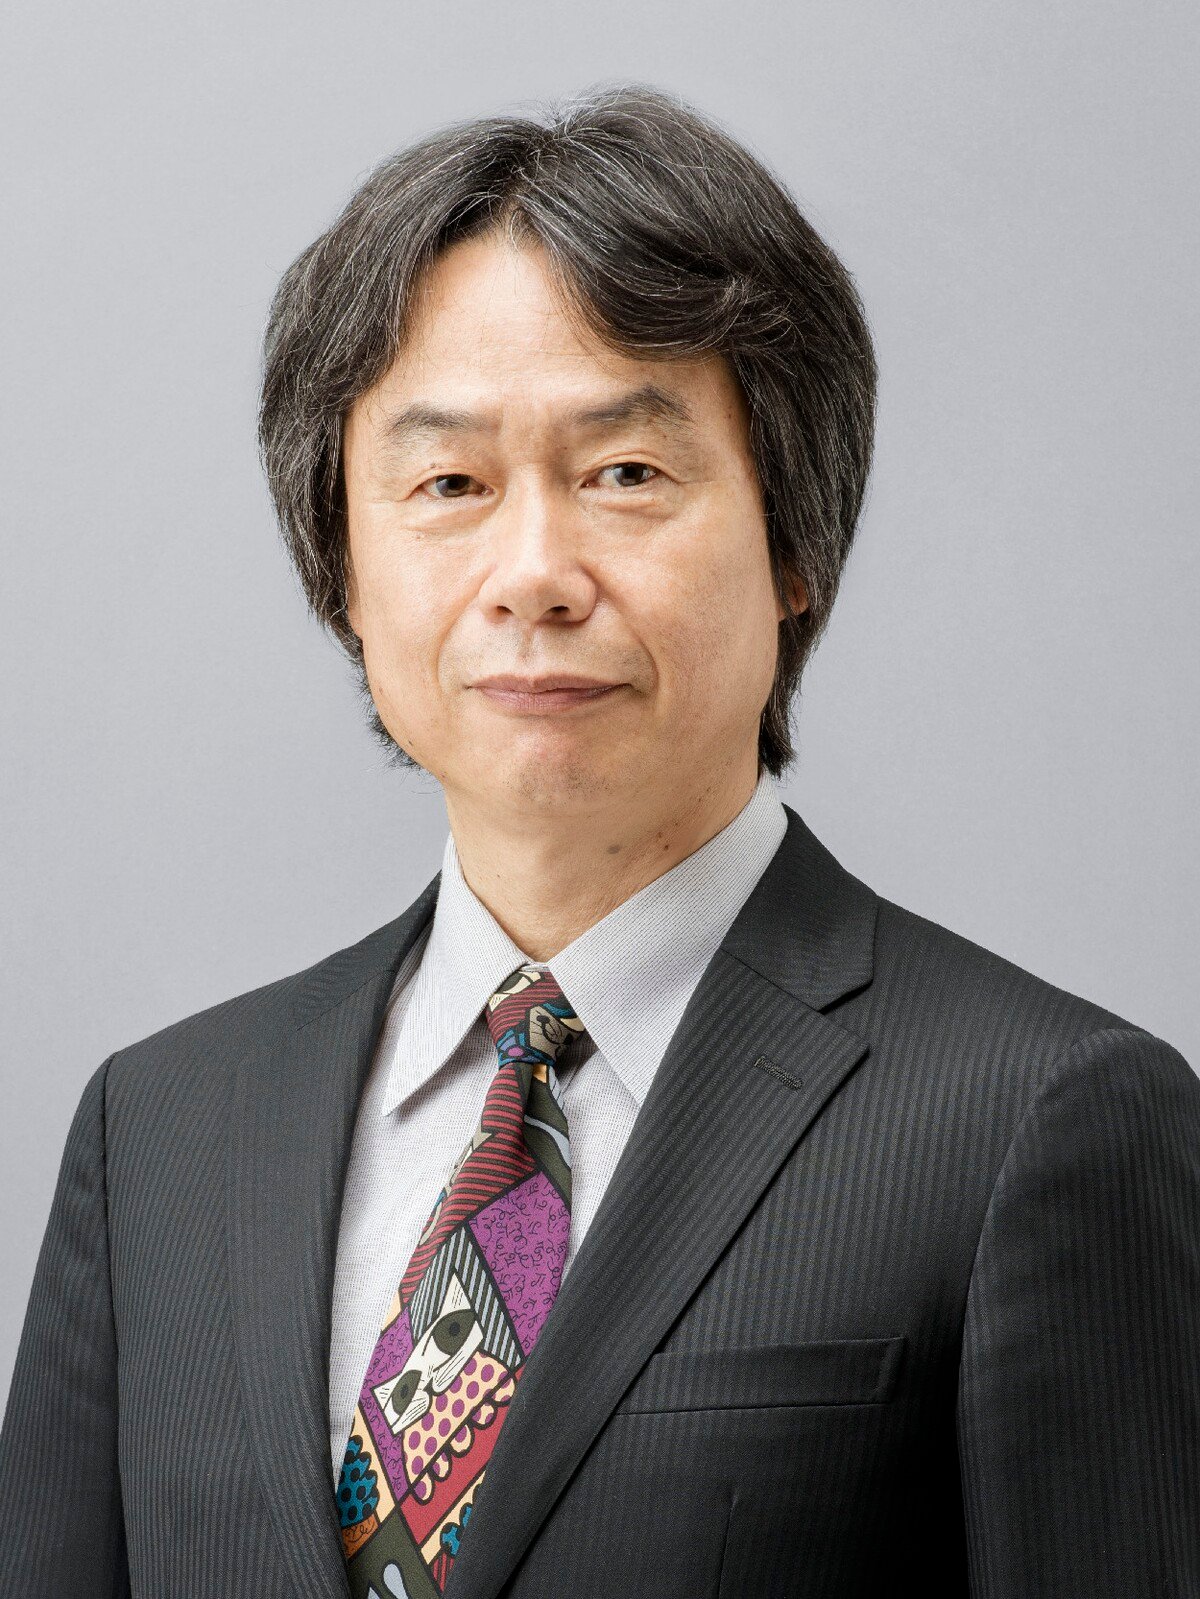 Nintendo's Miyamoto Stepping Down, Working on Smaller Games